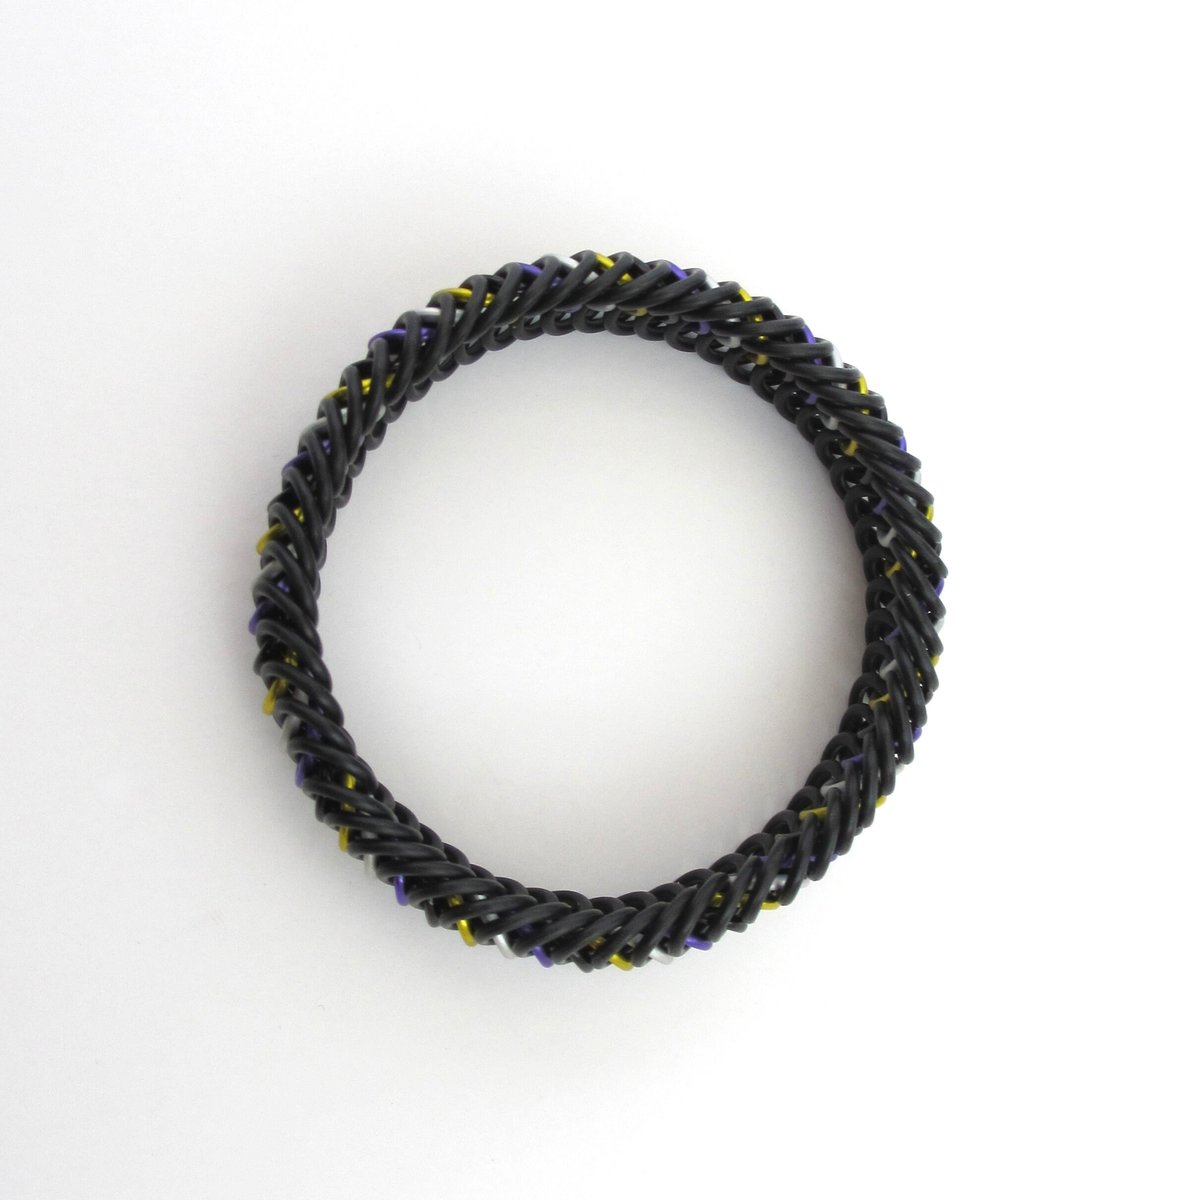 Nonbinary pride bracelet, stretchy chainmail bracelet, yellow white purple black